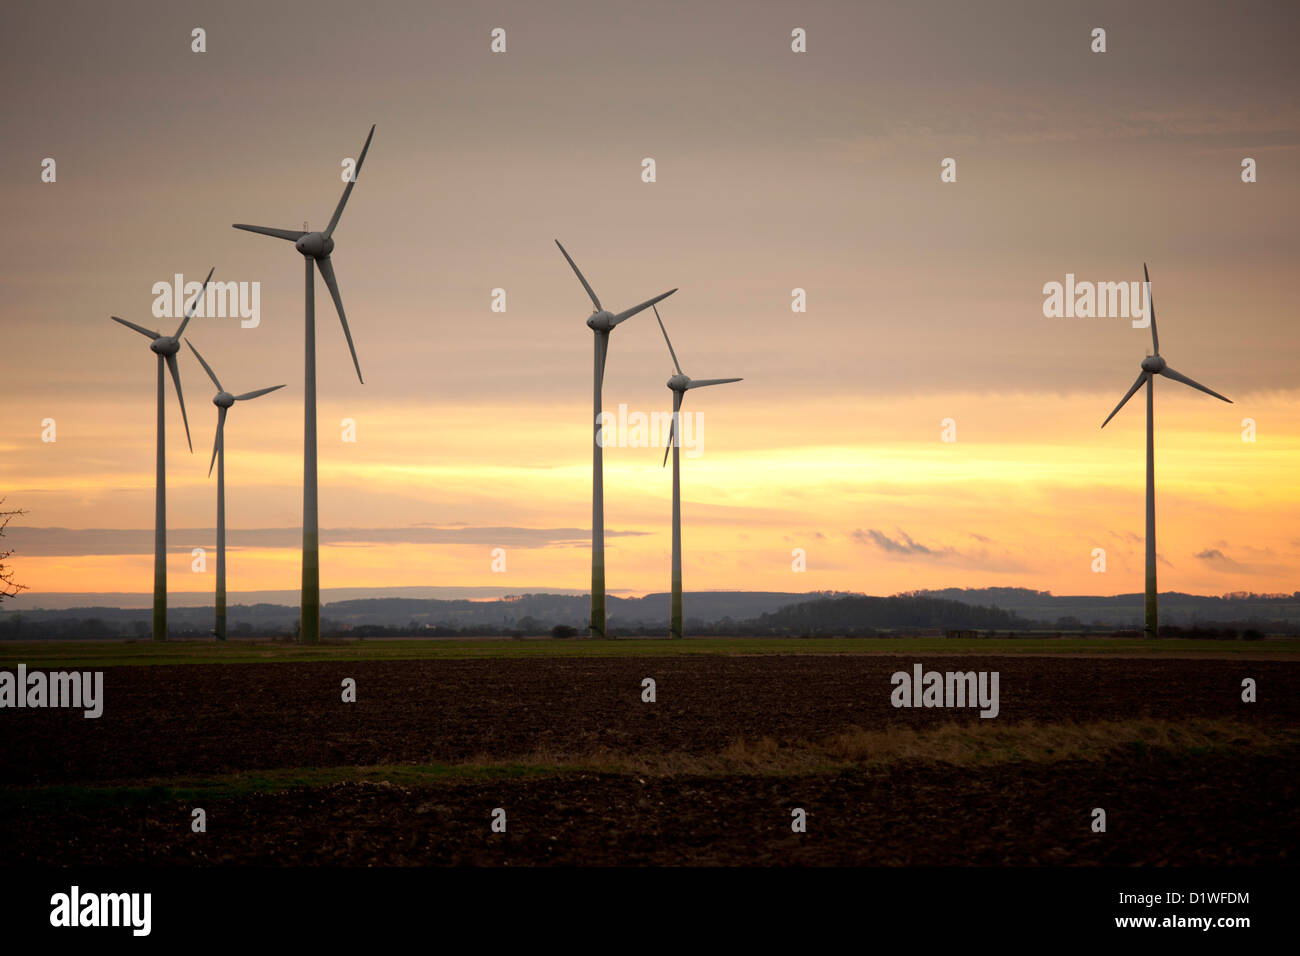 A wind turbine farm on the outskirts of Mablethorpe, Lincolnshire, England, UK. Stock Photo